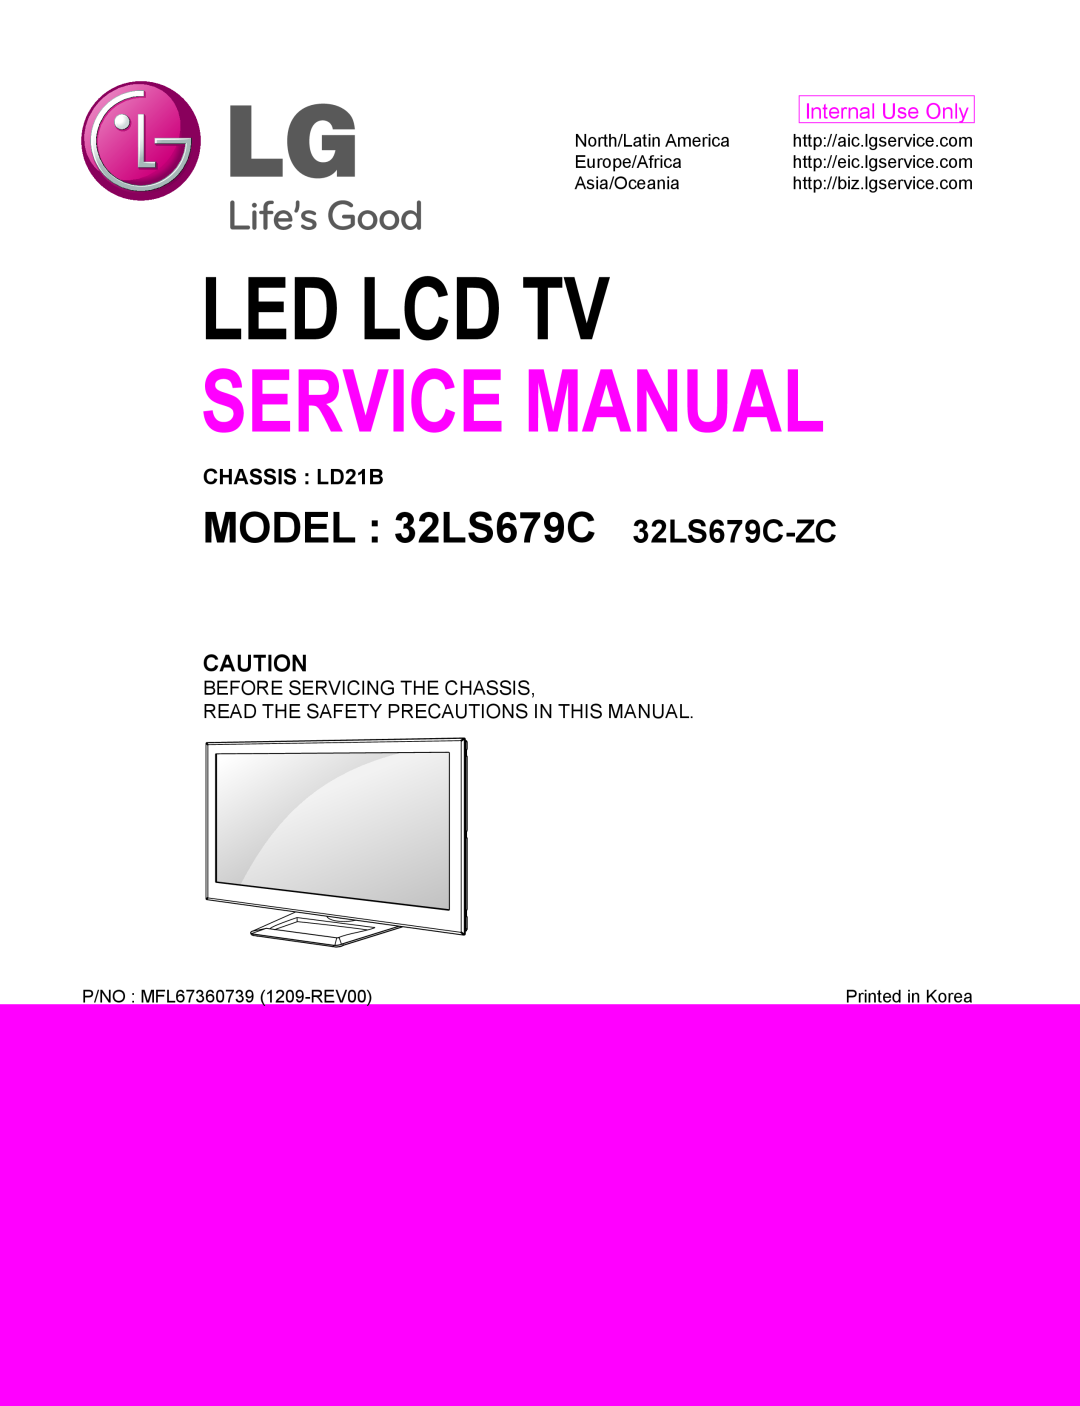 LG Electronics service manual CHASSIS LD21B, Led Lcd Tv, Service Manual, MODEL 32LS679C 32LS679C-ZC, Internal Use Only 